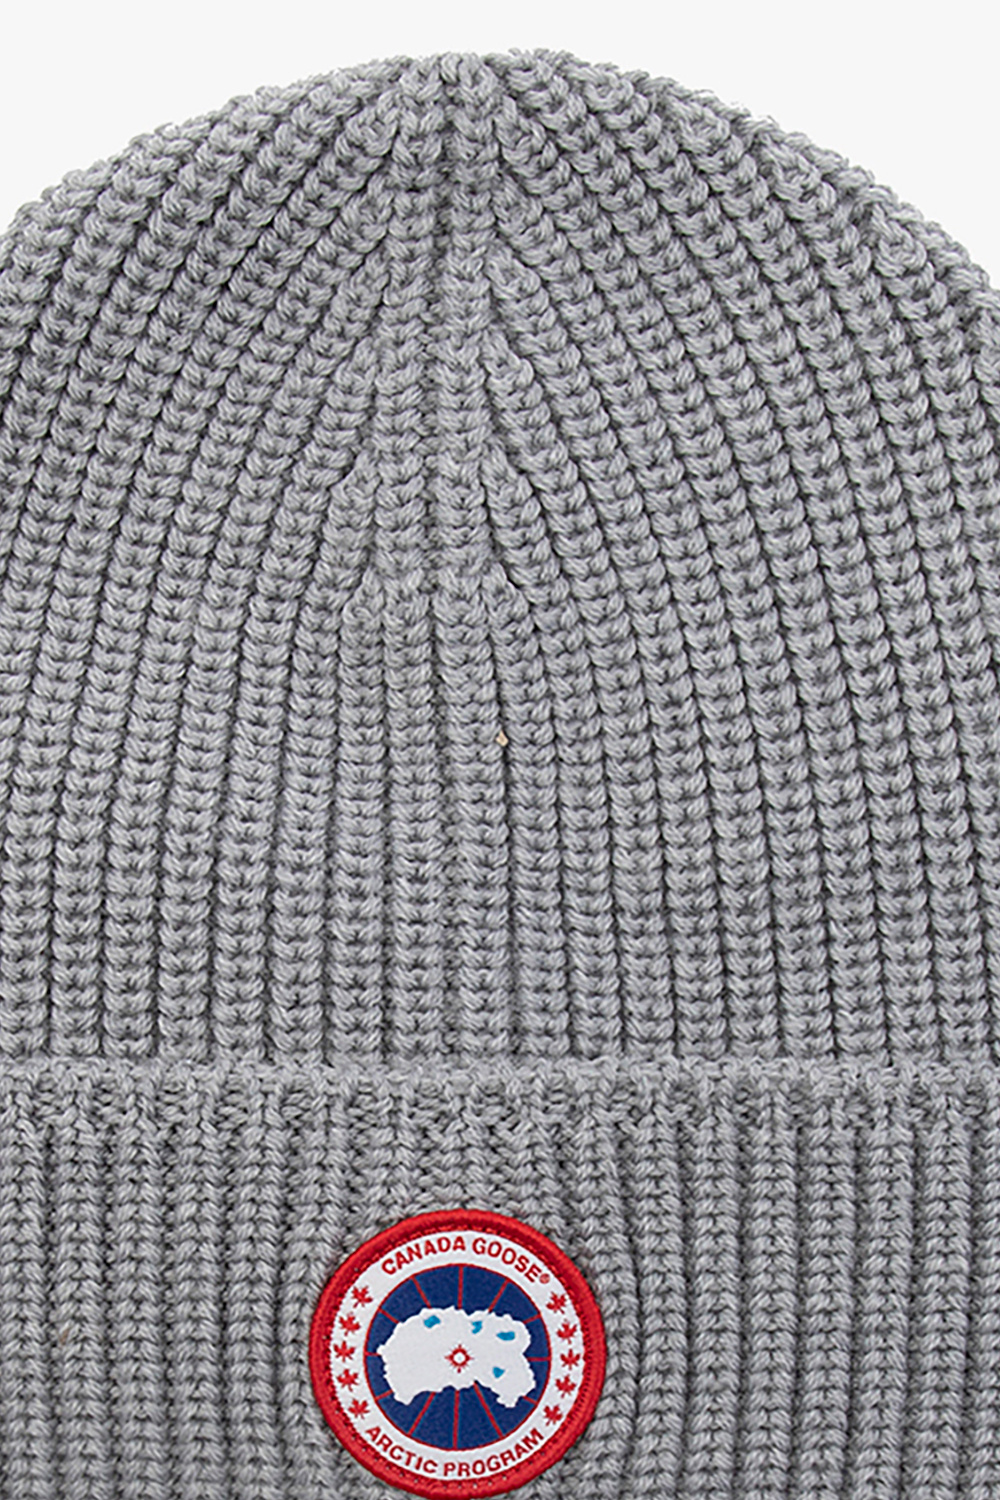 Canada Goose MultiActiv hat with logo